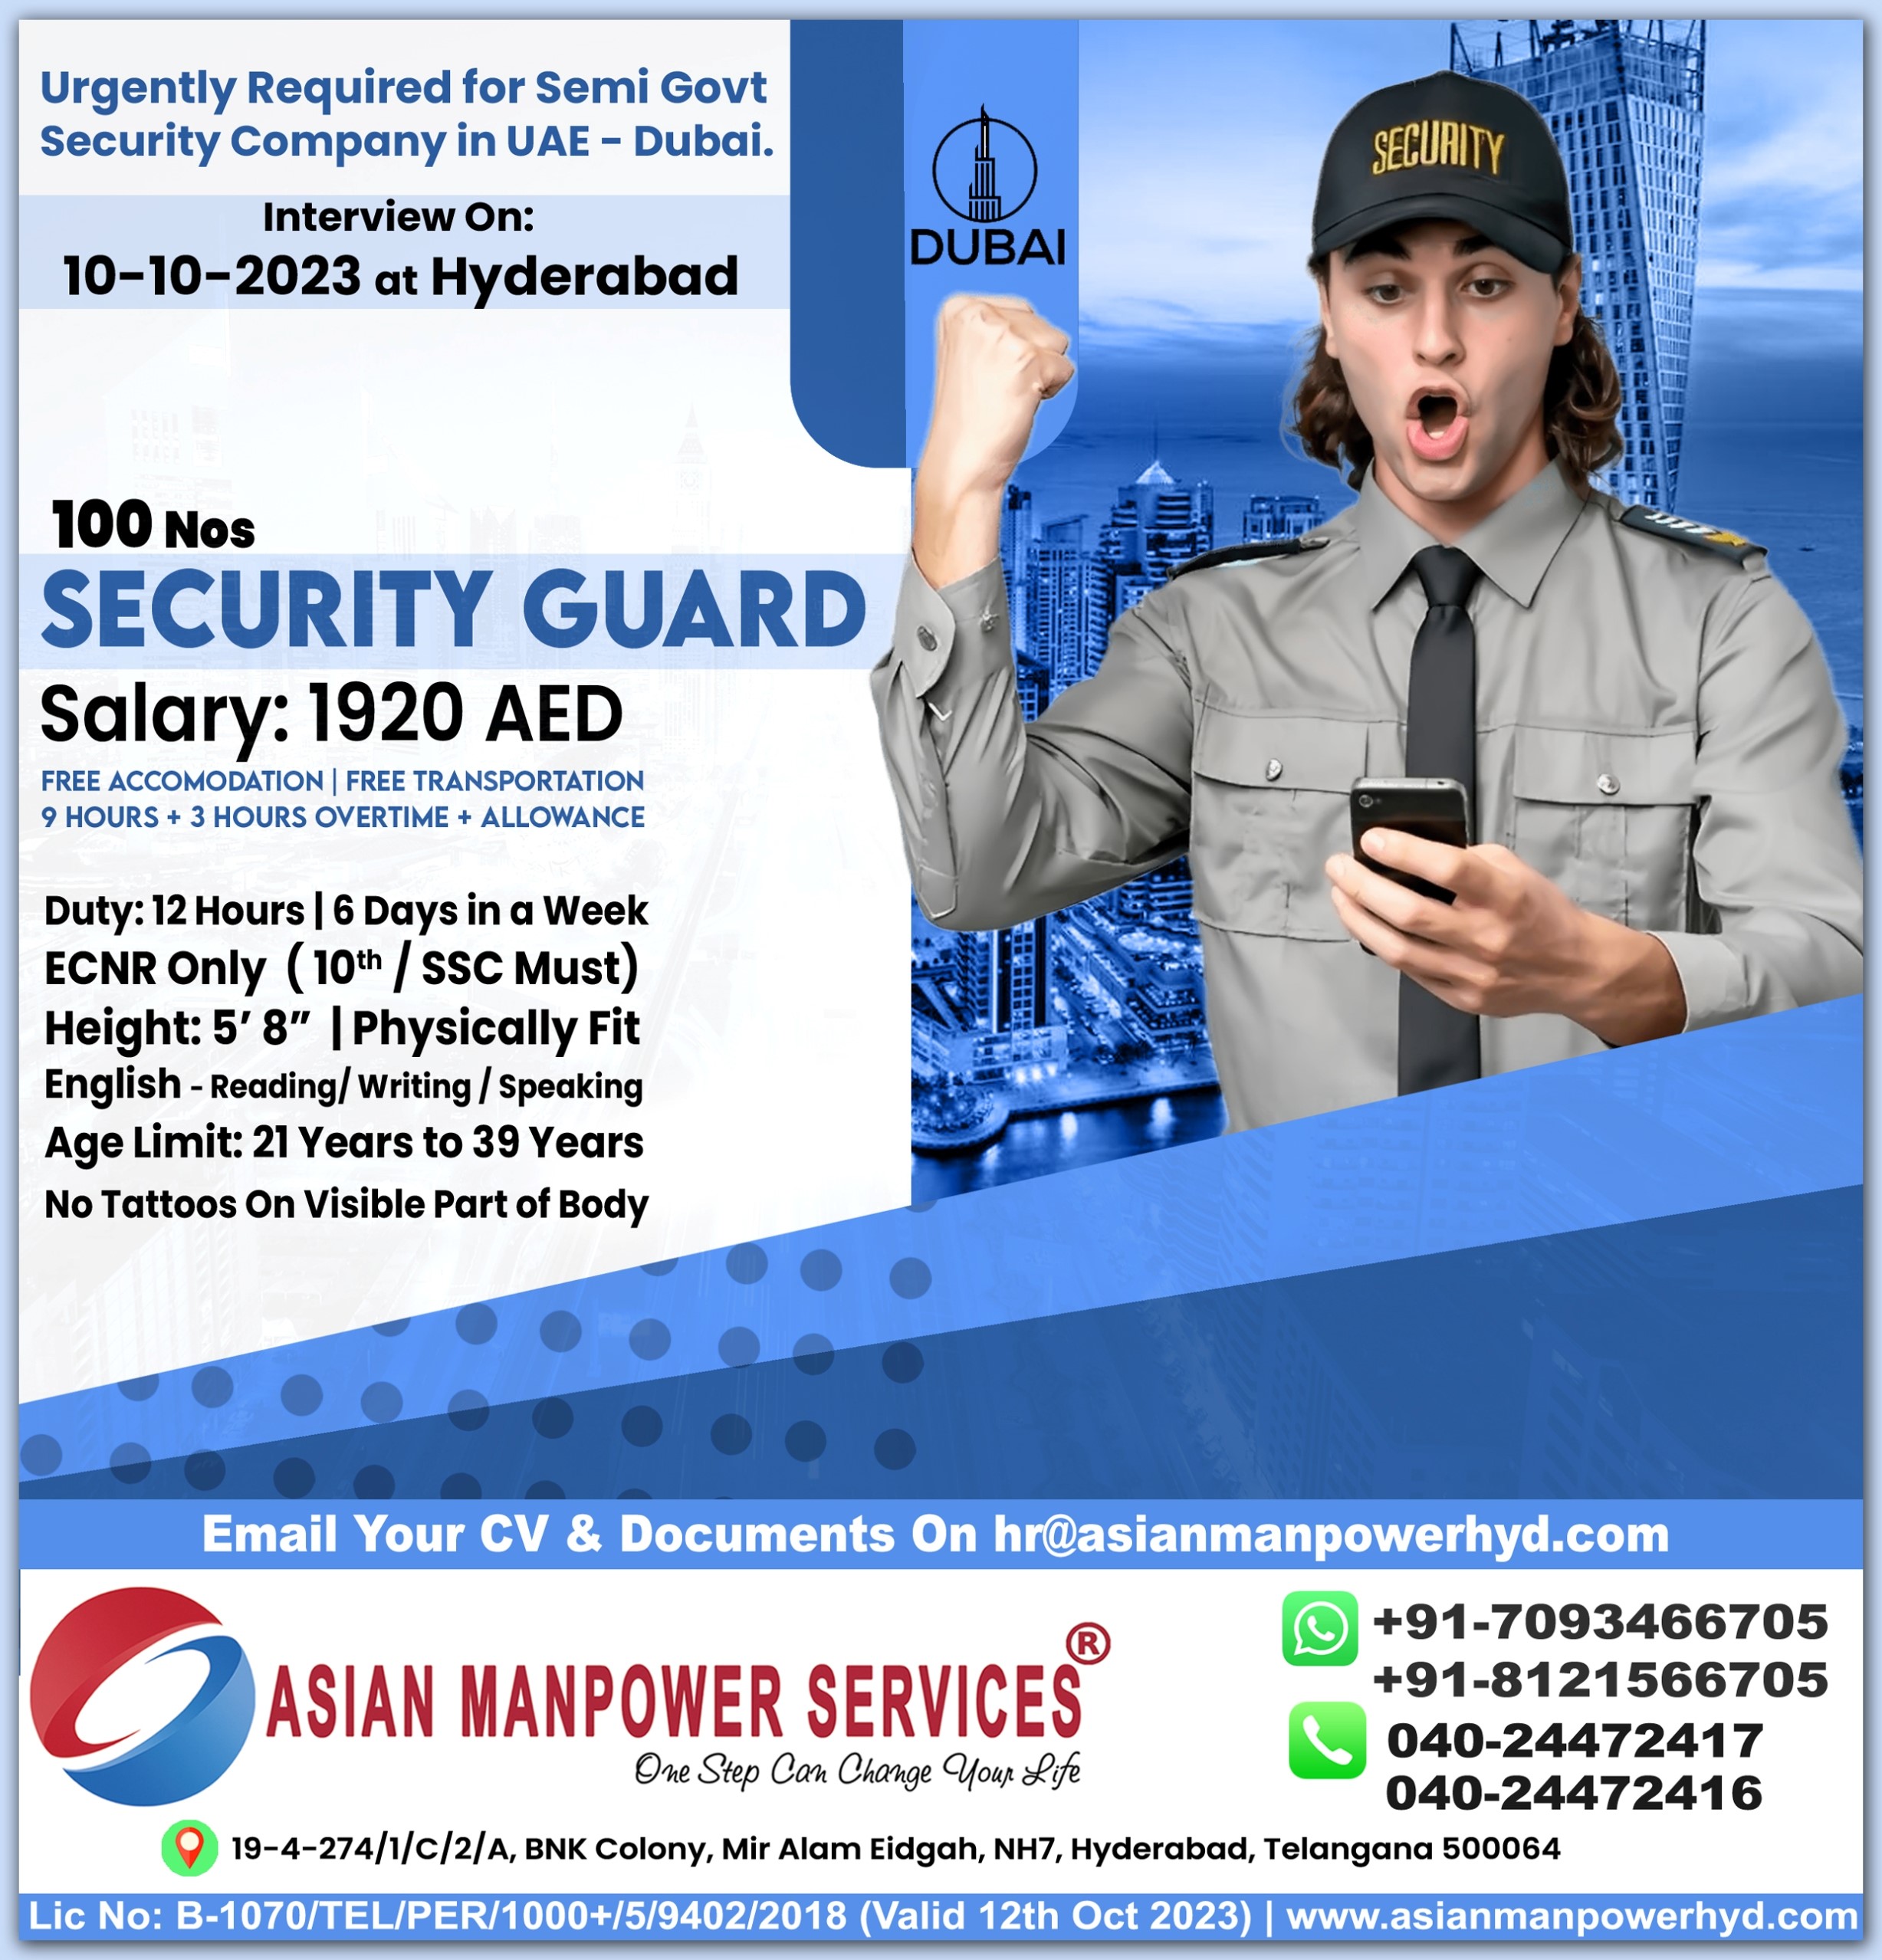 Securtiy Guard Asian Manpower Services